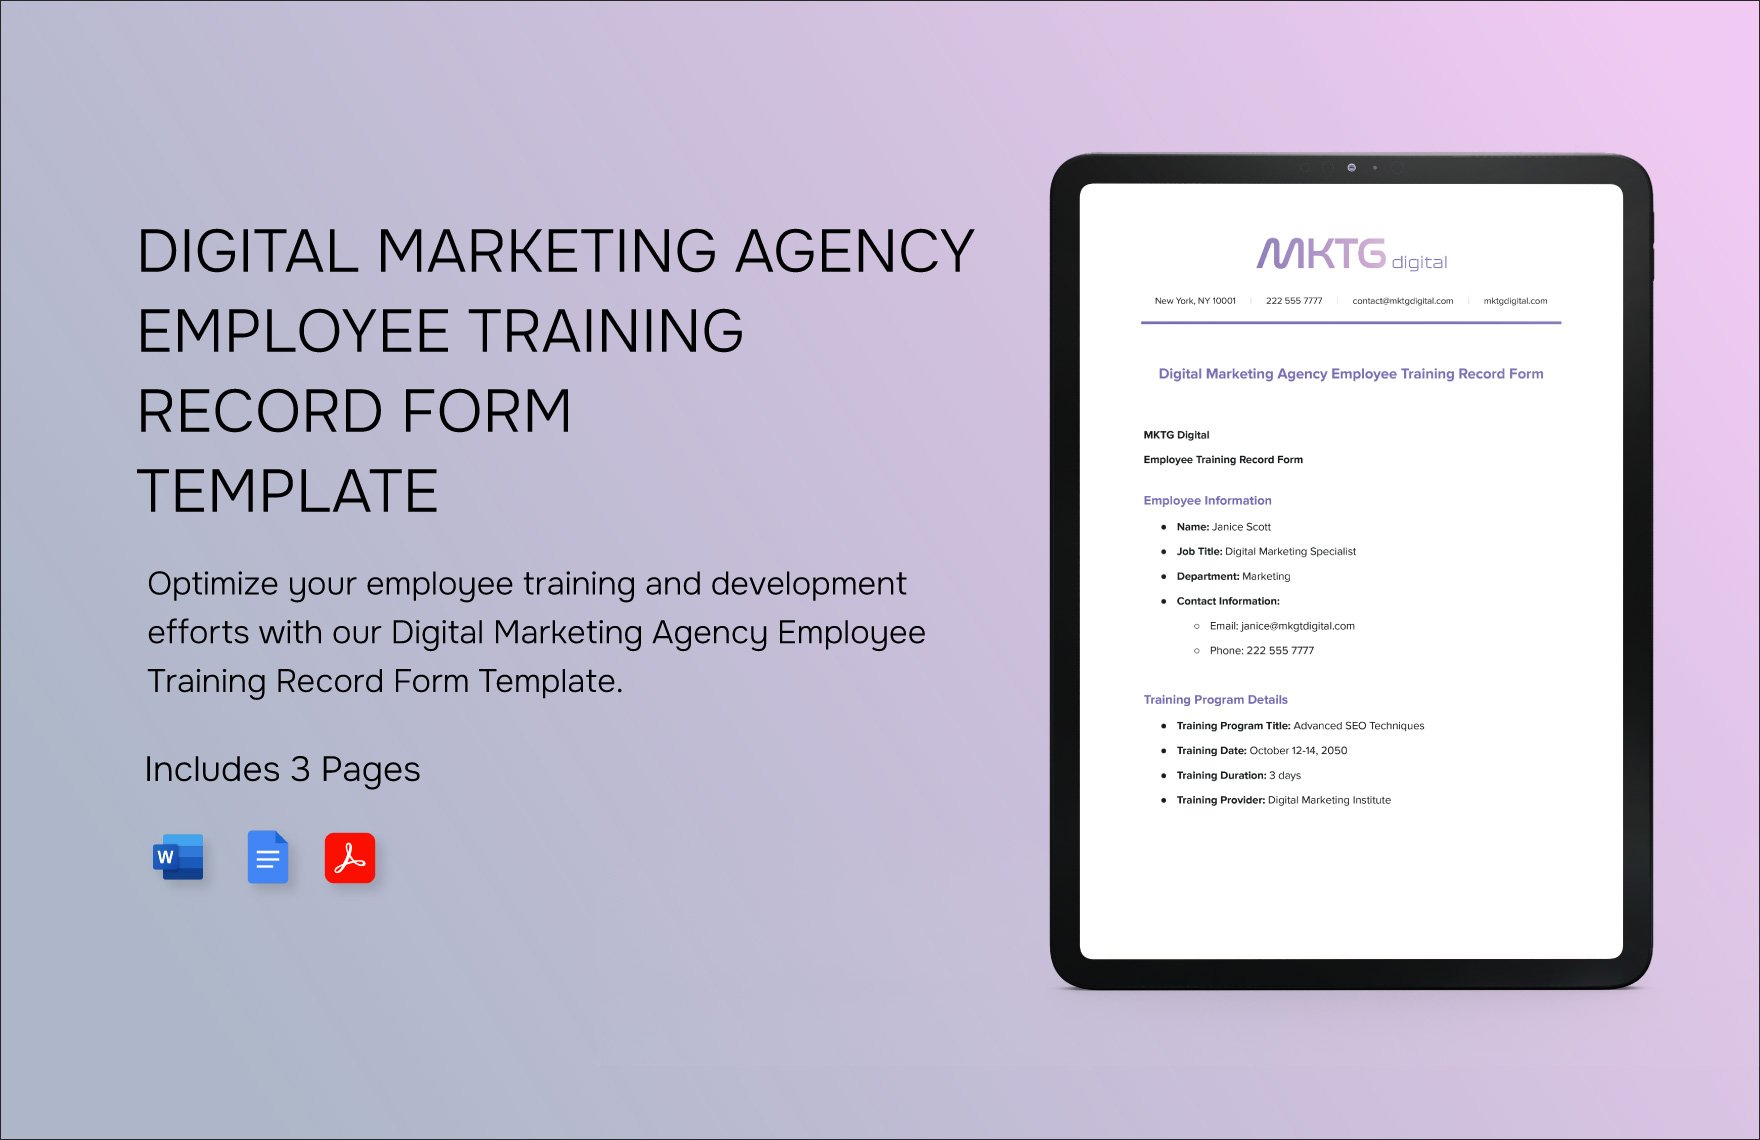 Digital Marketing Agency Employee Training Record Form Template in Word, Google Docs, PDF